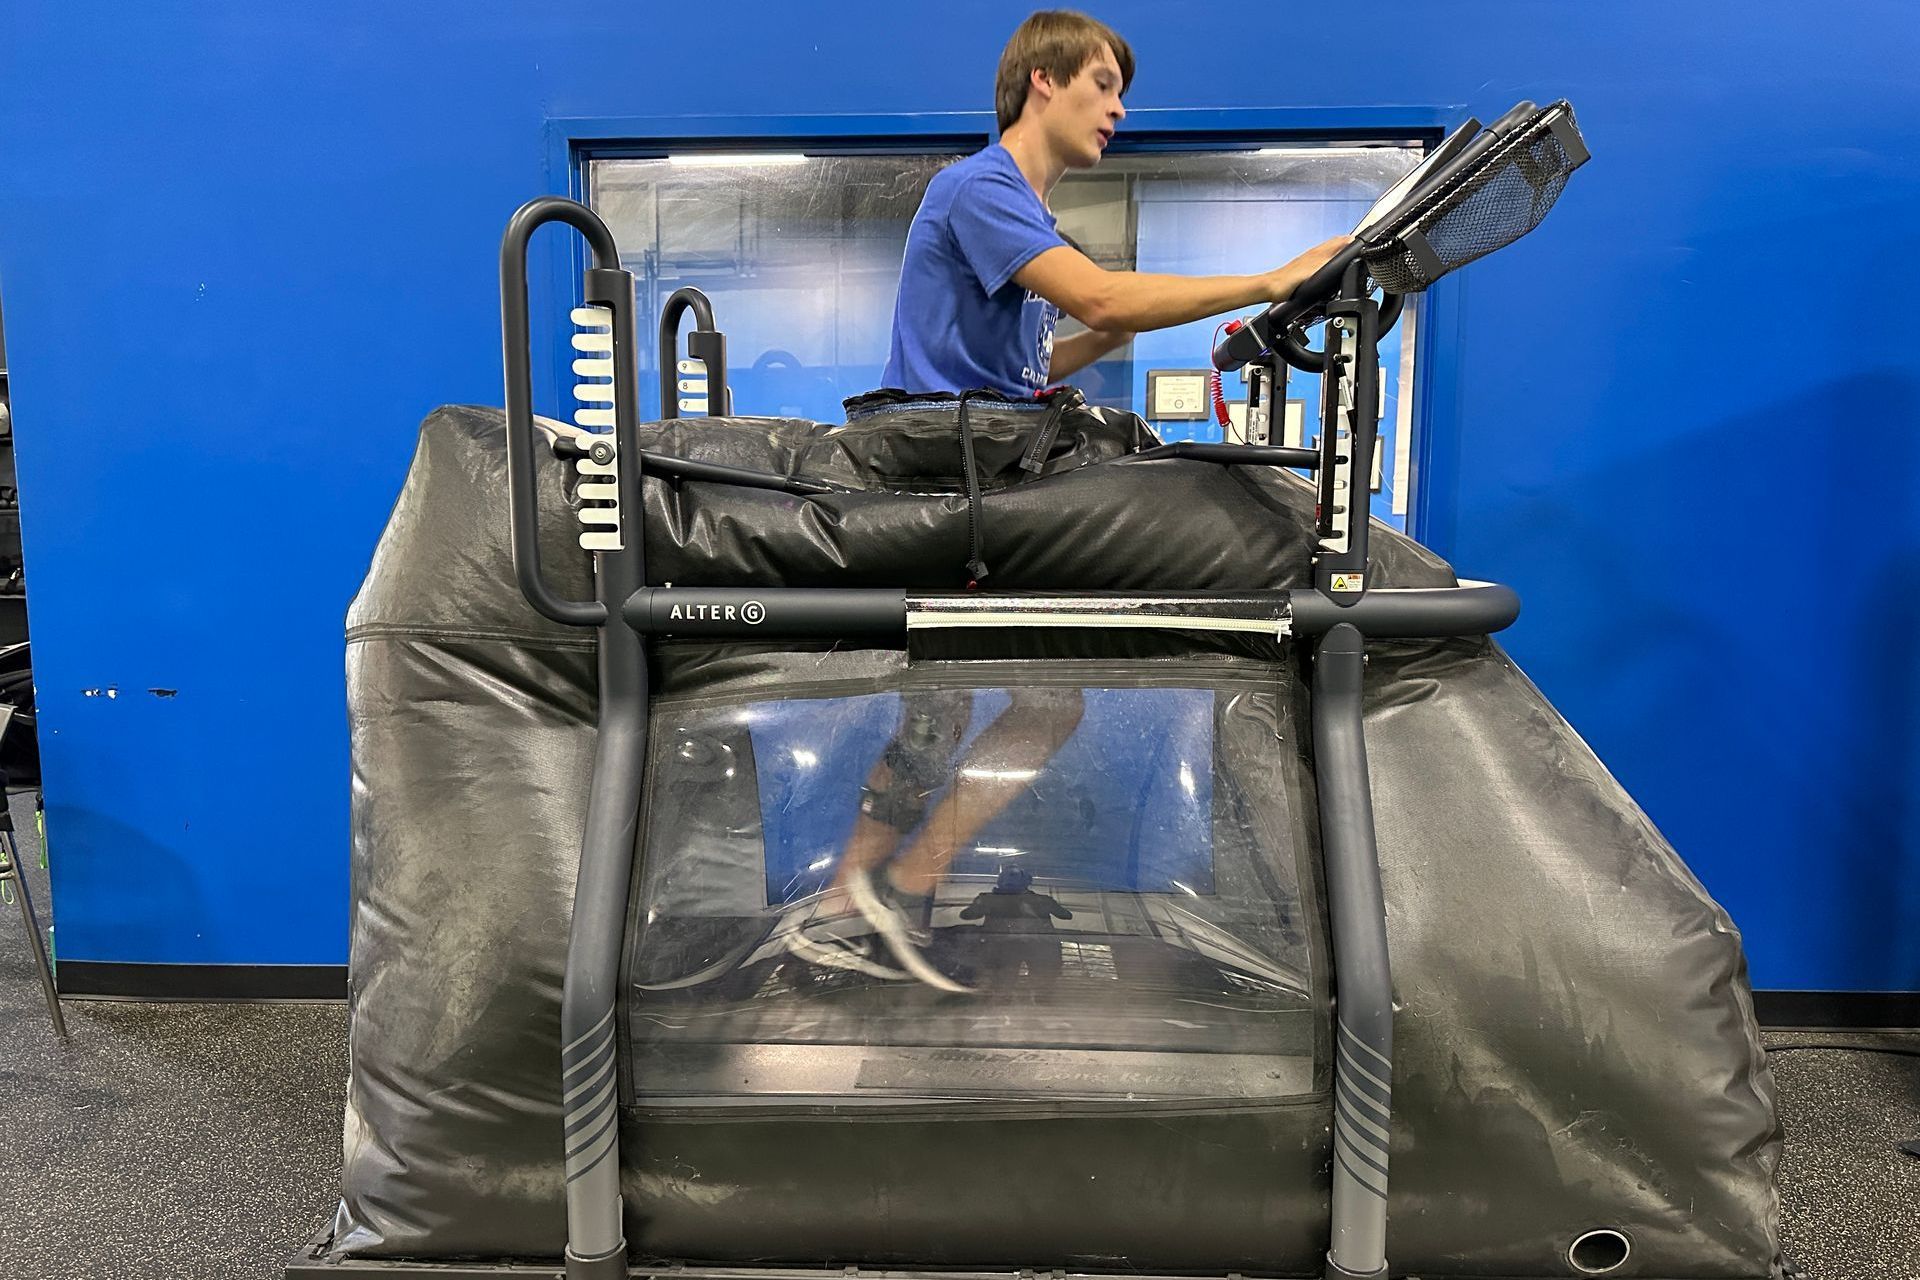 A man is sitting on a treadmill in a gym.